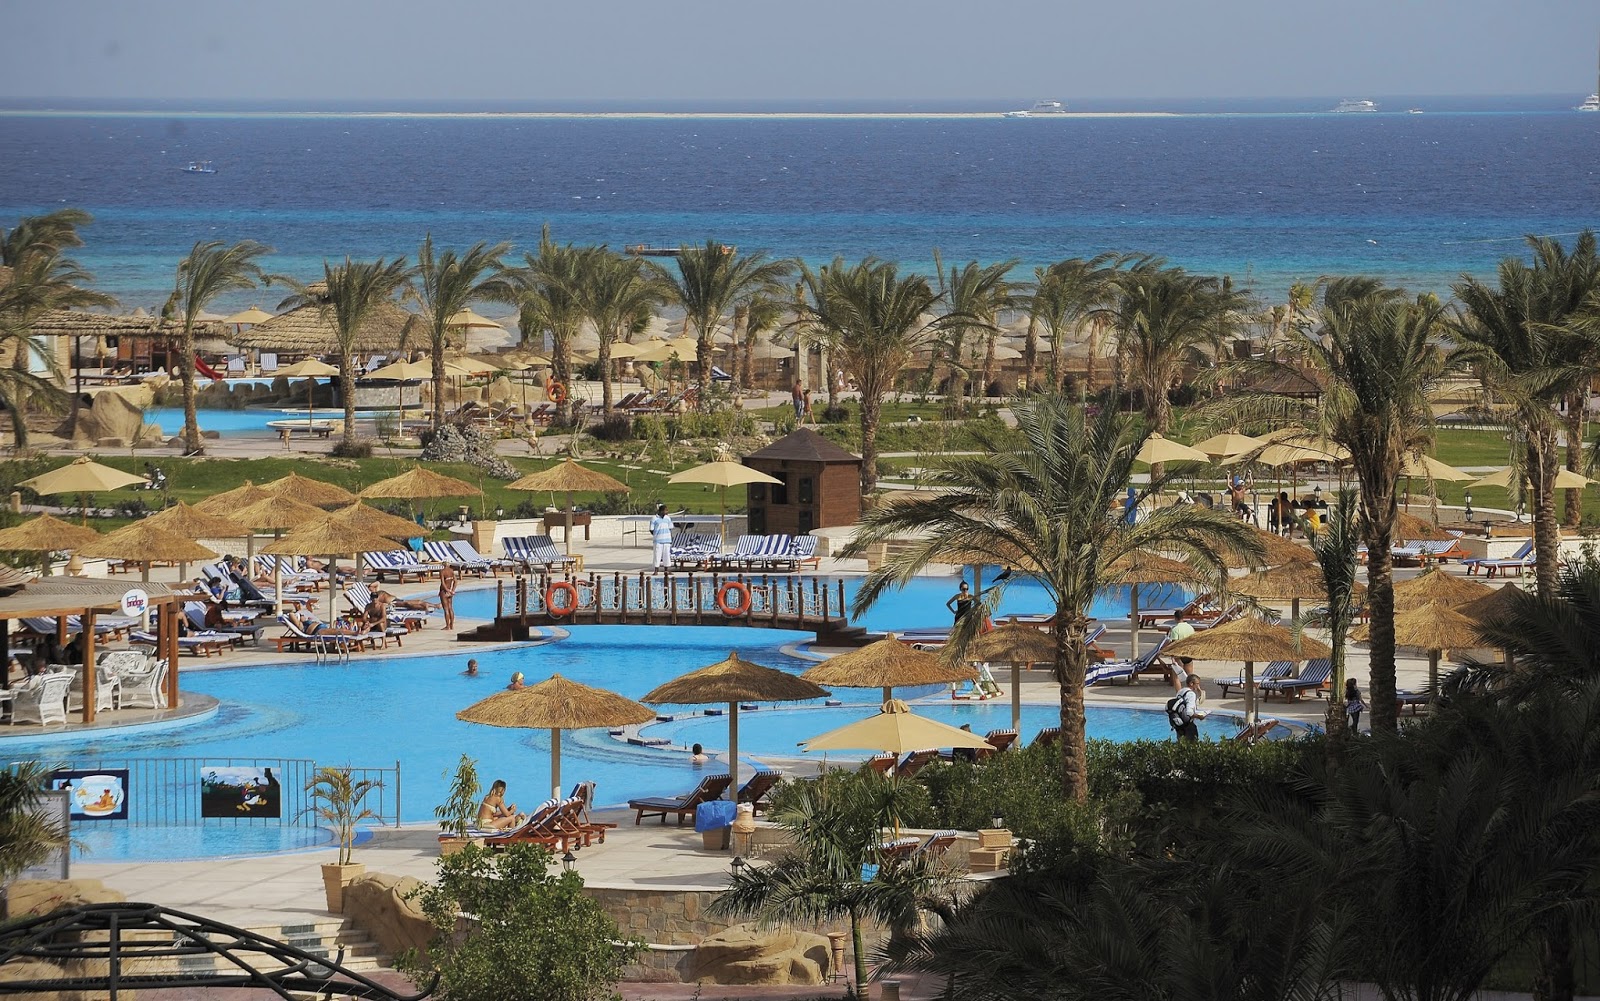 Africa, Egypt, Red Sea, Hurghada, palm trees, pool, rest, resort, Африка, Египет, Красное море, Хургада, пальмы, бассейн, отдых, курорт